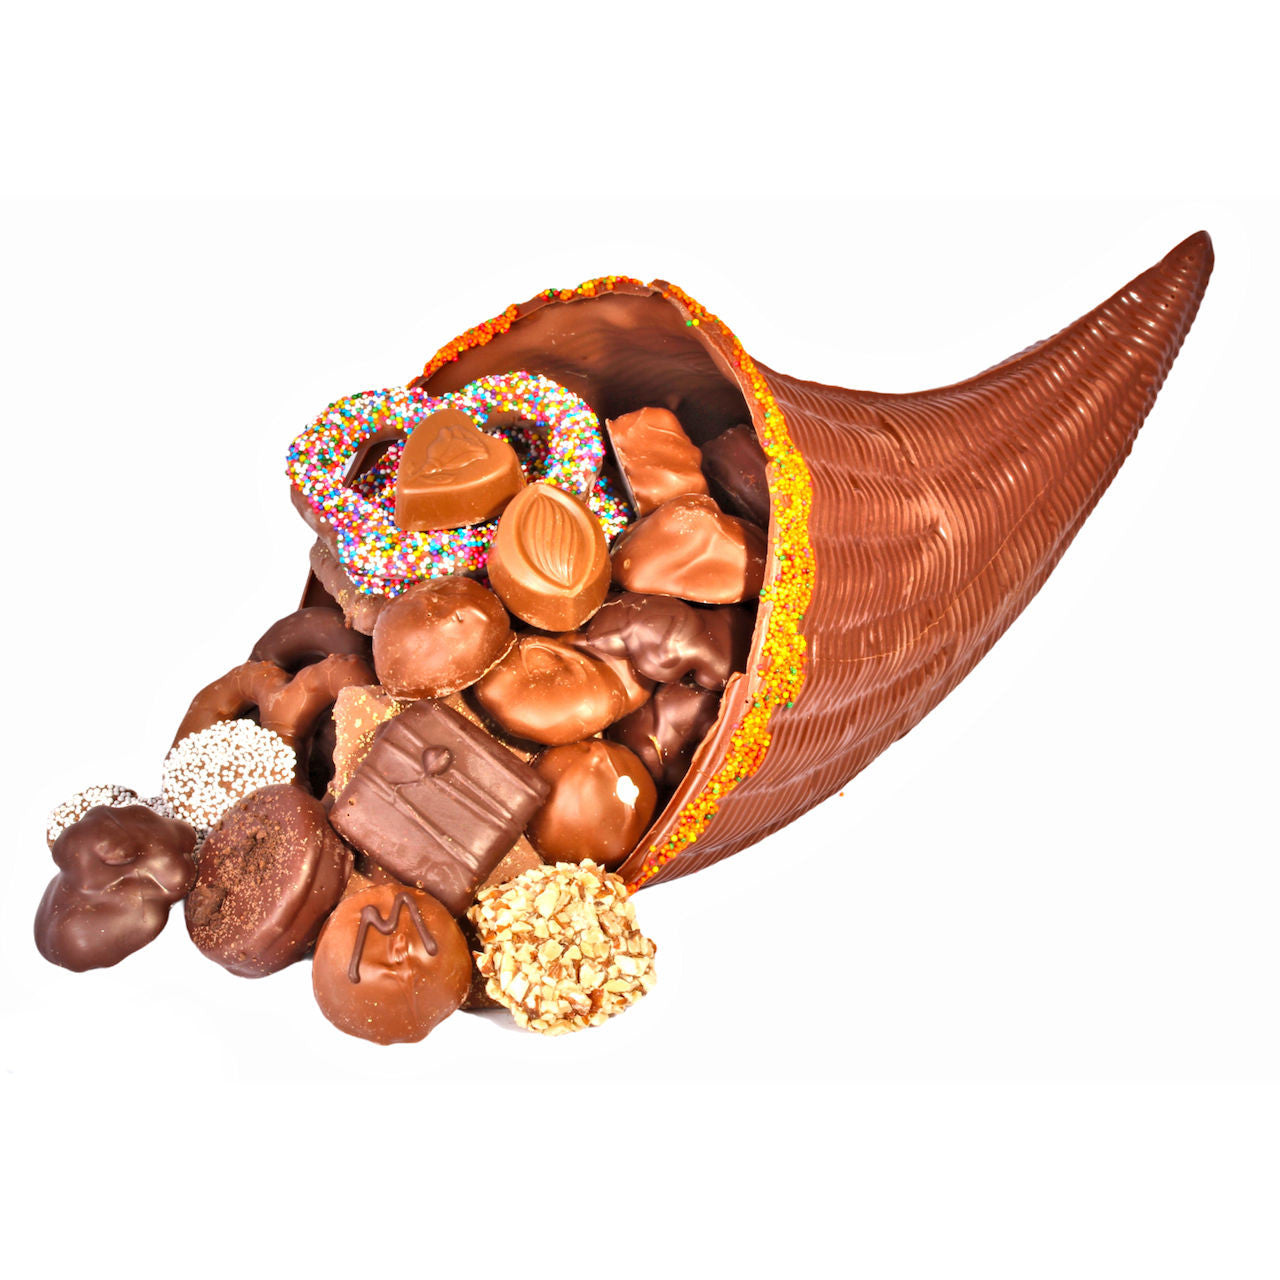 Giant Cornucopia (chocolate filled)